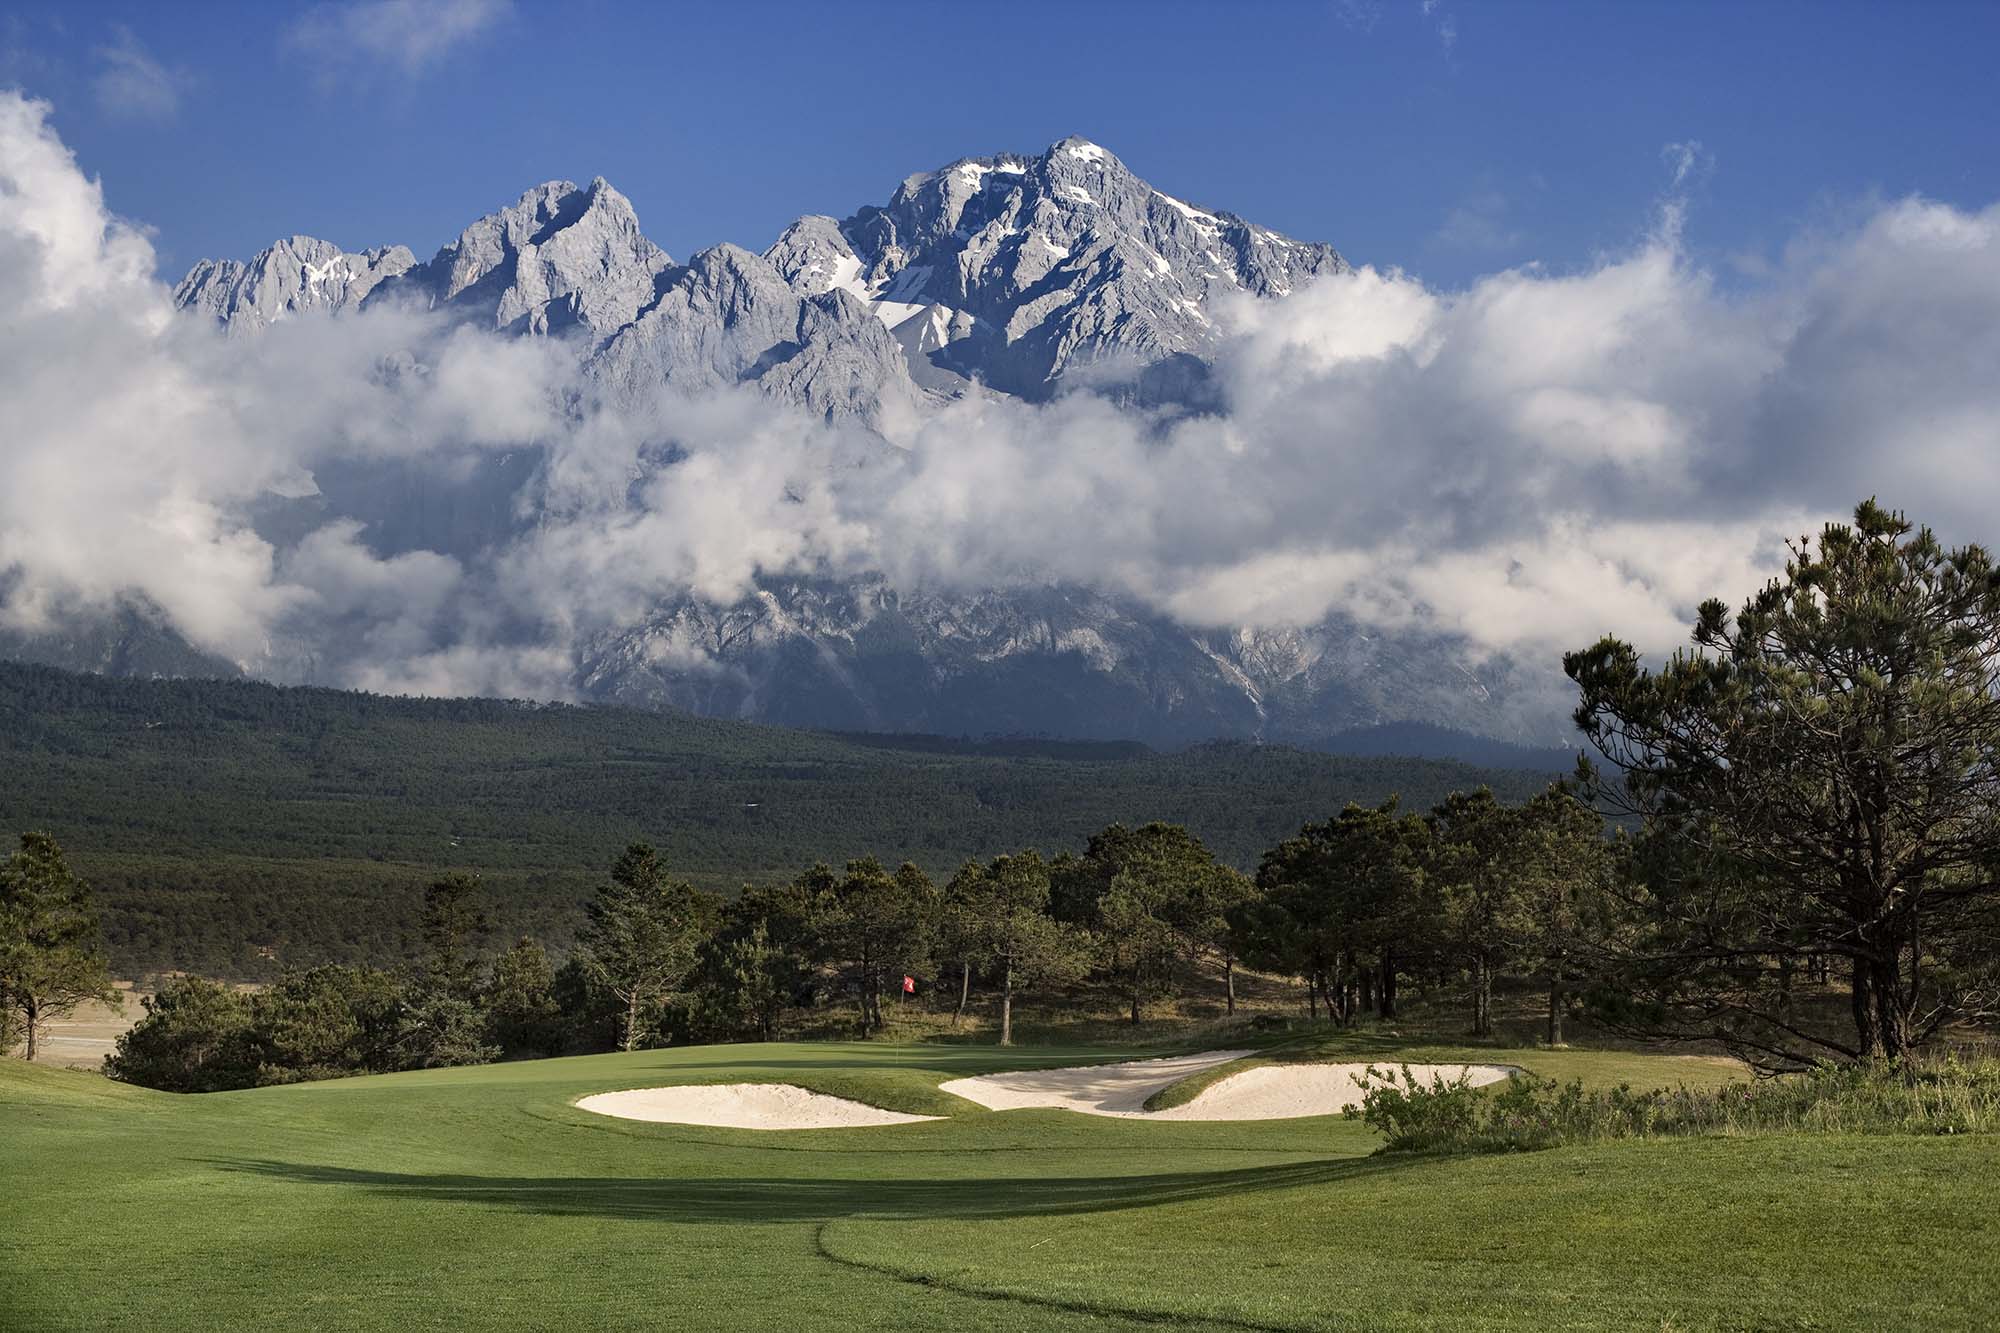 نادي جايد دراجون سنو ماونتن للجولف Jade Dragon Snow Mountain Golf Club، الصين